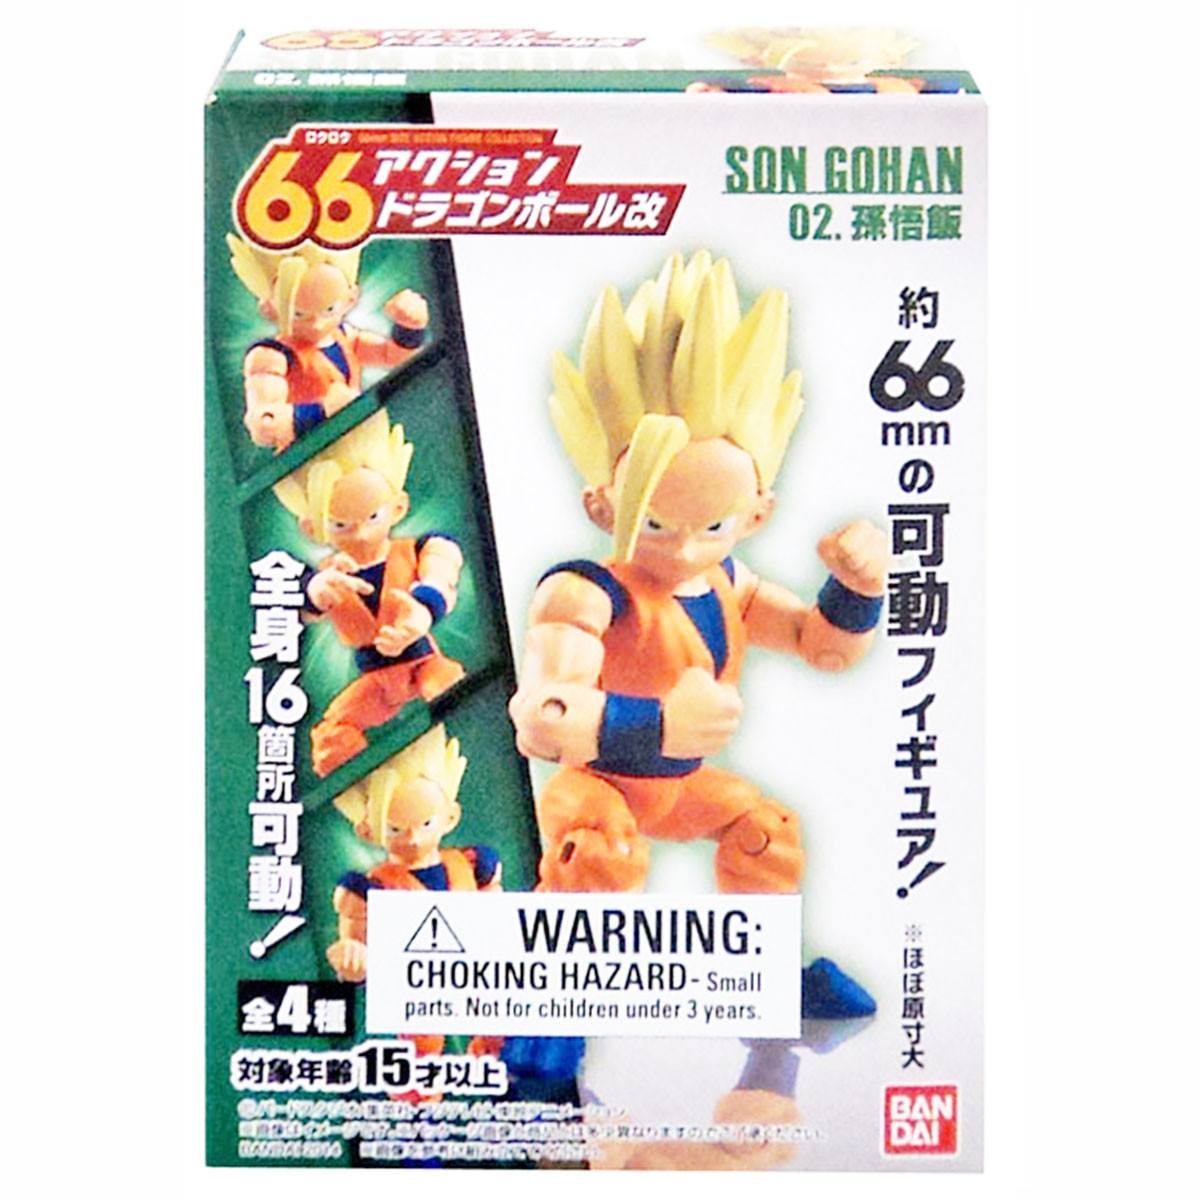 Bandai 66 Action Dash Dragon Ball Z Super Saiyan 2 Gohan Action Figure